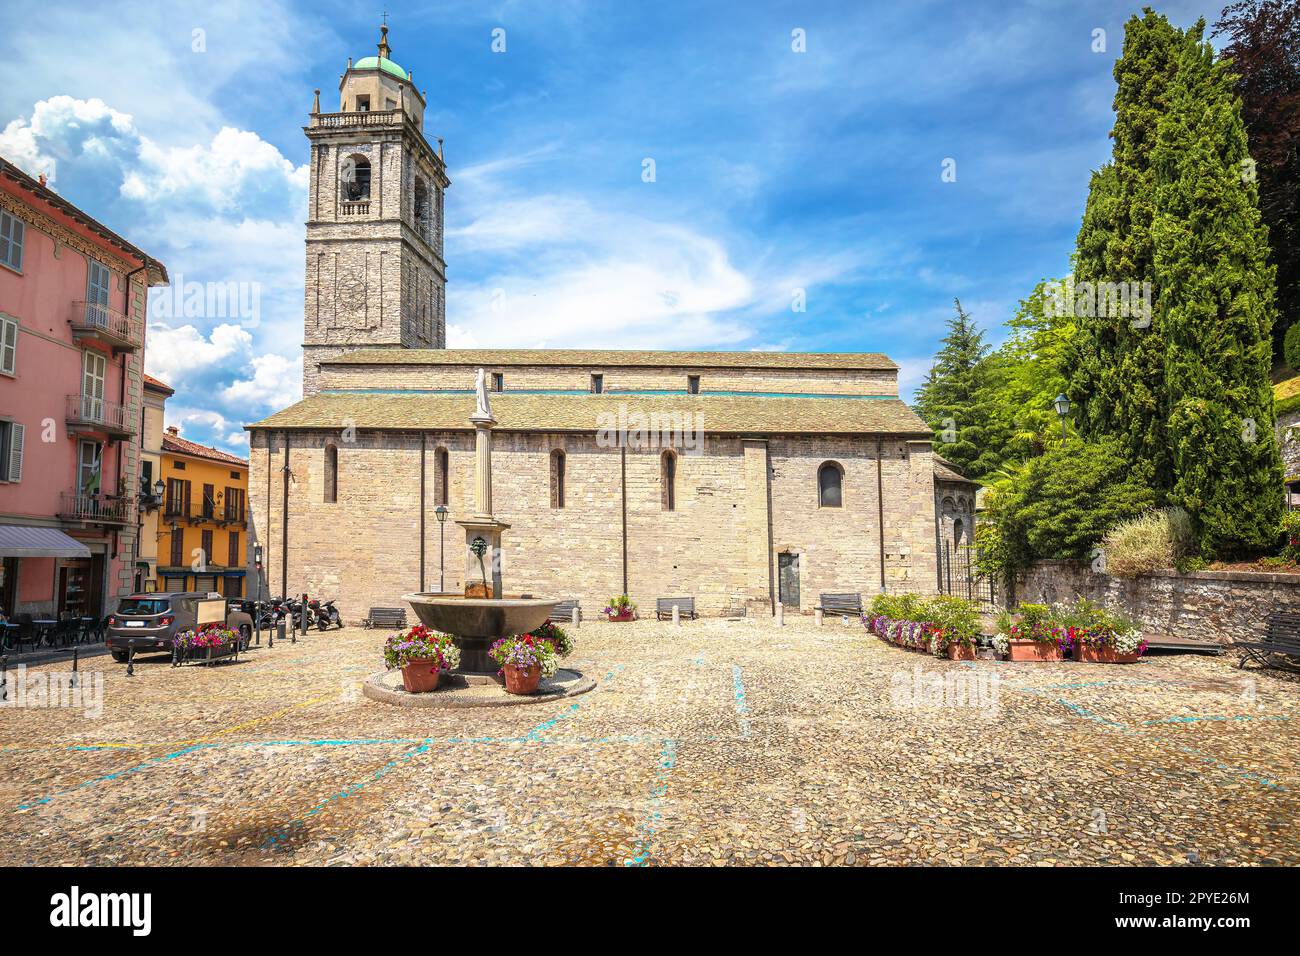 Town of Bellagio church square colorful architecture view Stock Photo